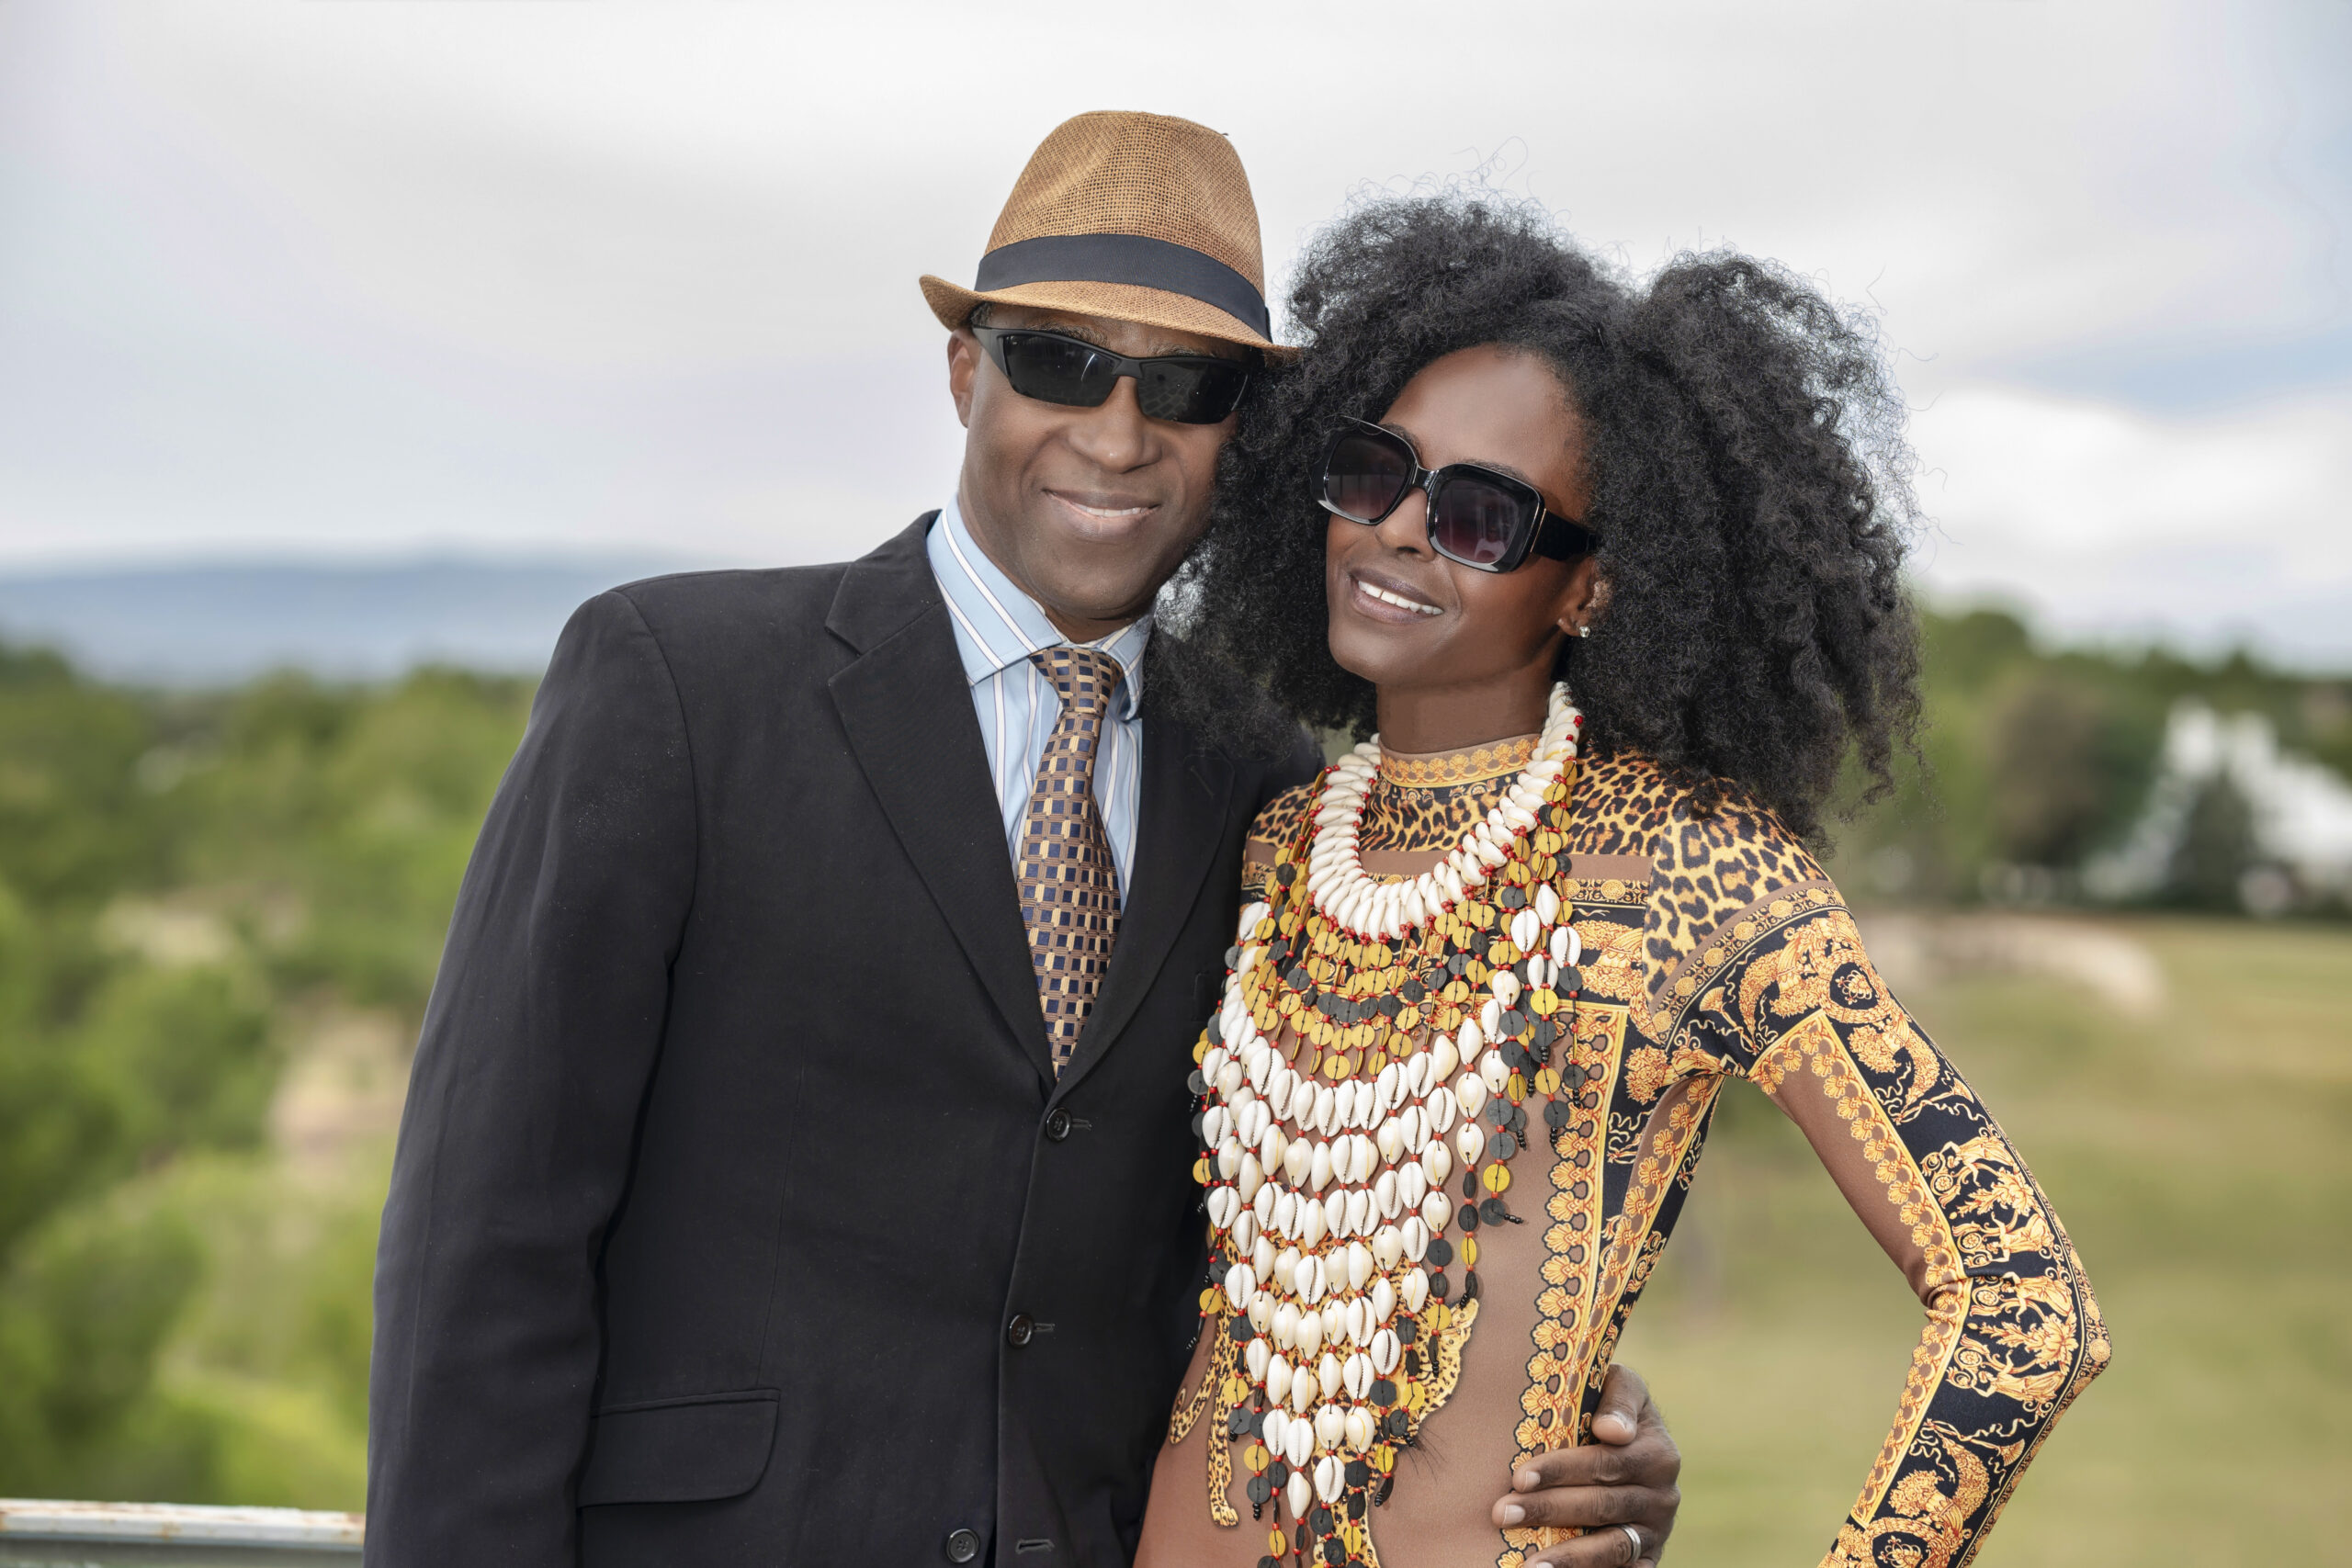 HRH Prince Kunle and Princess Keisha Omilana visited El Bosque Golf Club 2 scaled